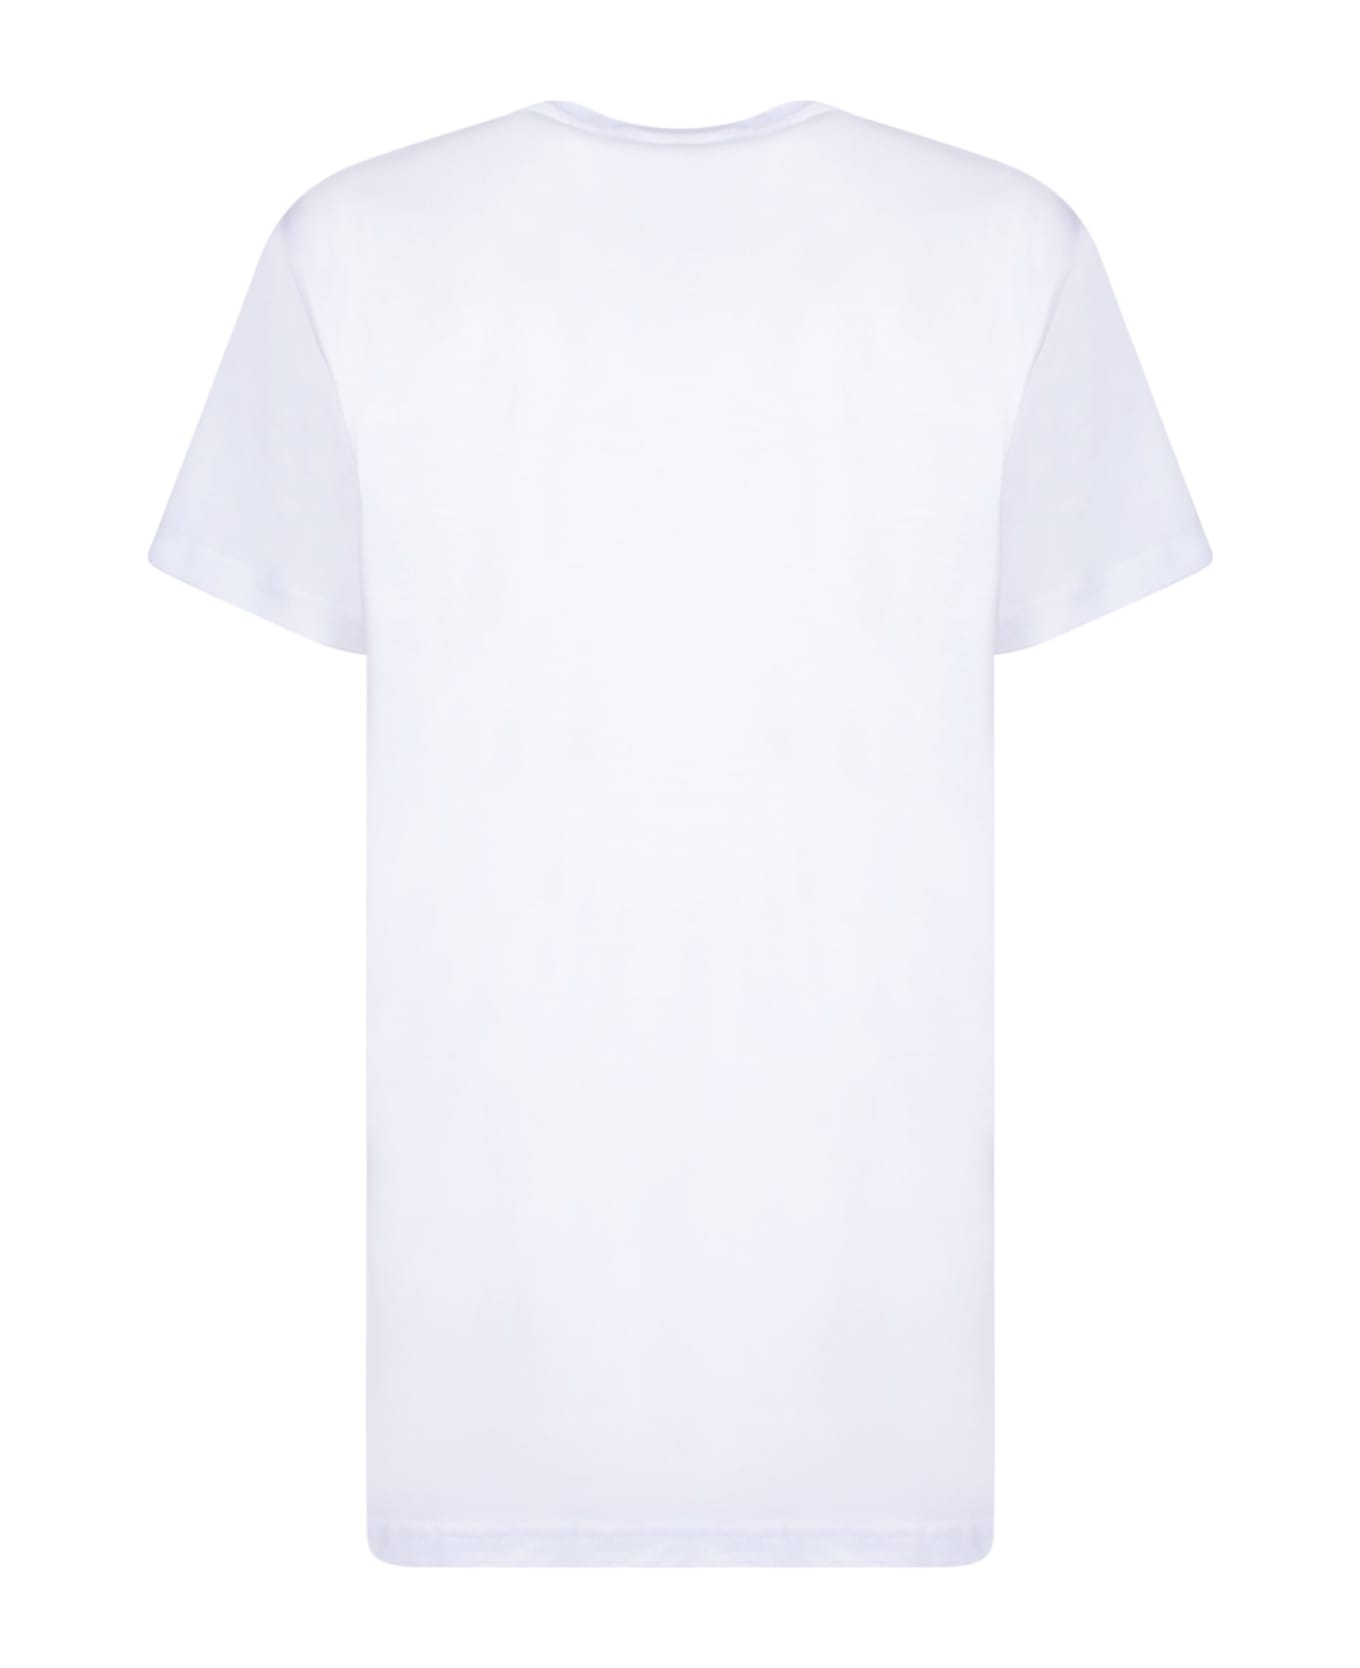 Alessandro Enriquez Sicily Cotton T-shirt Black And White - White